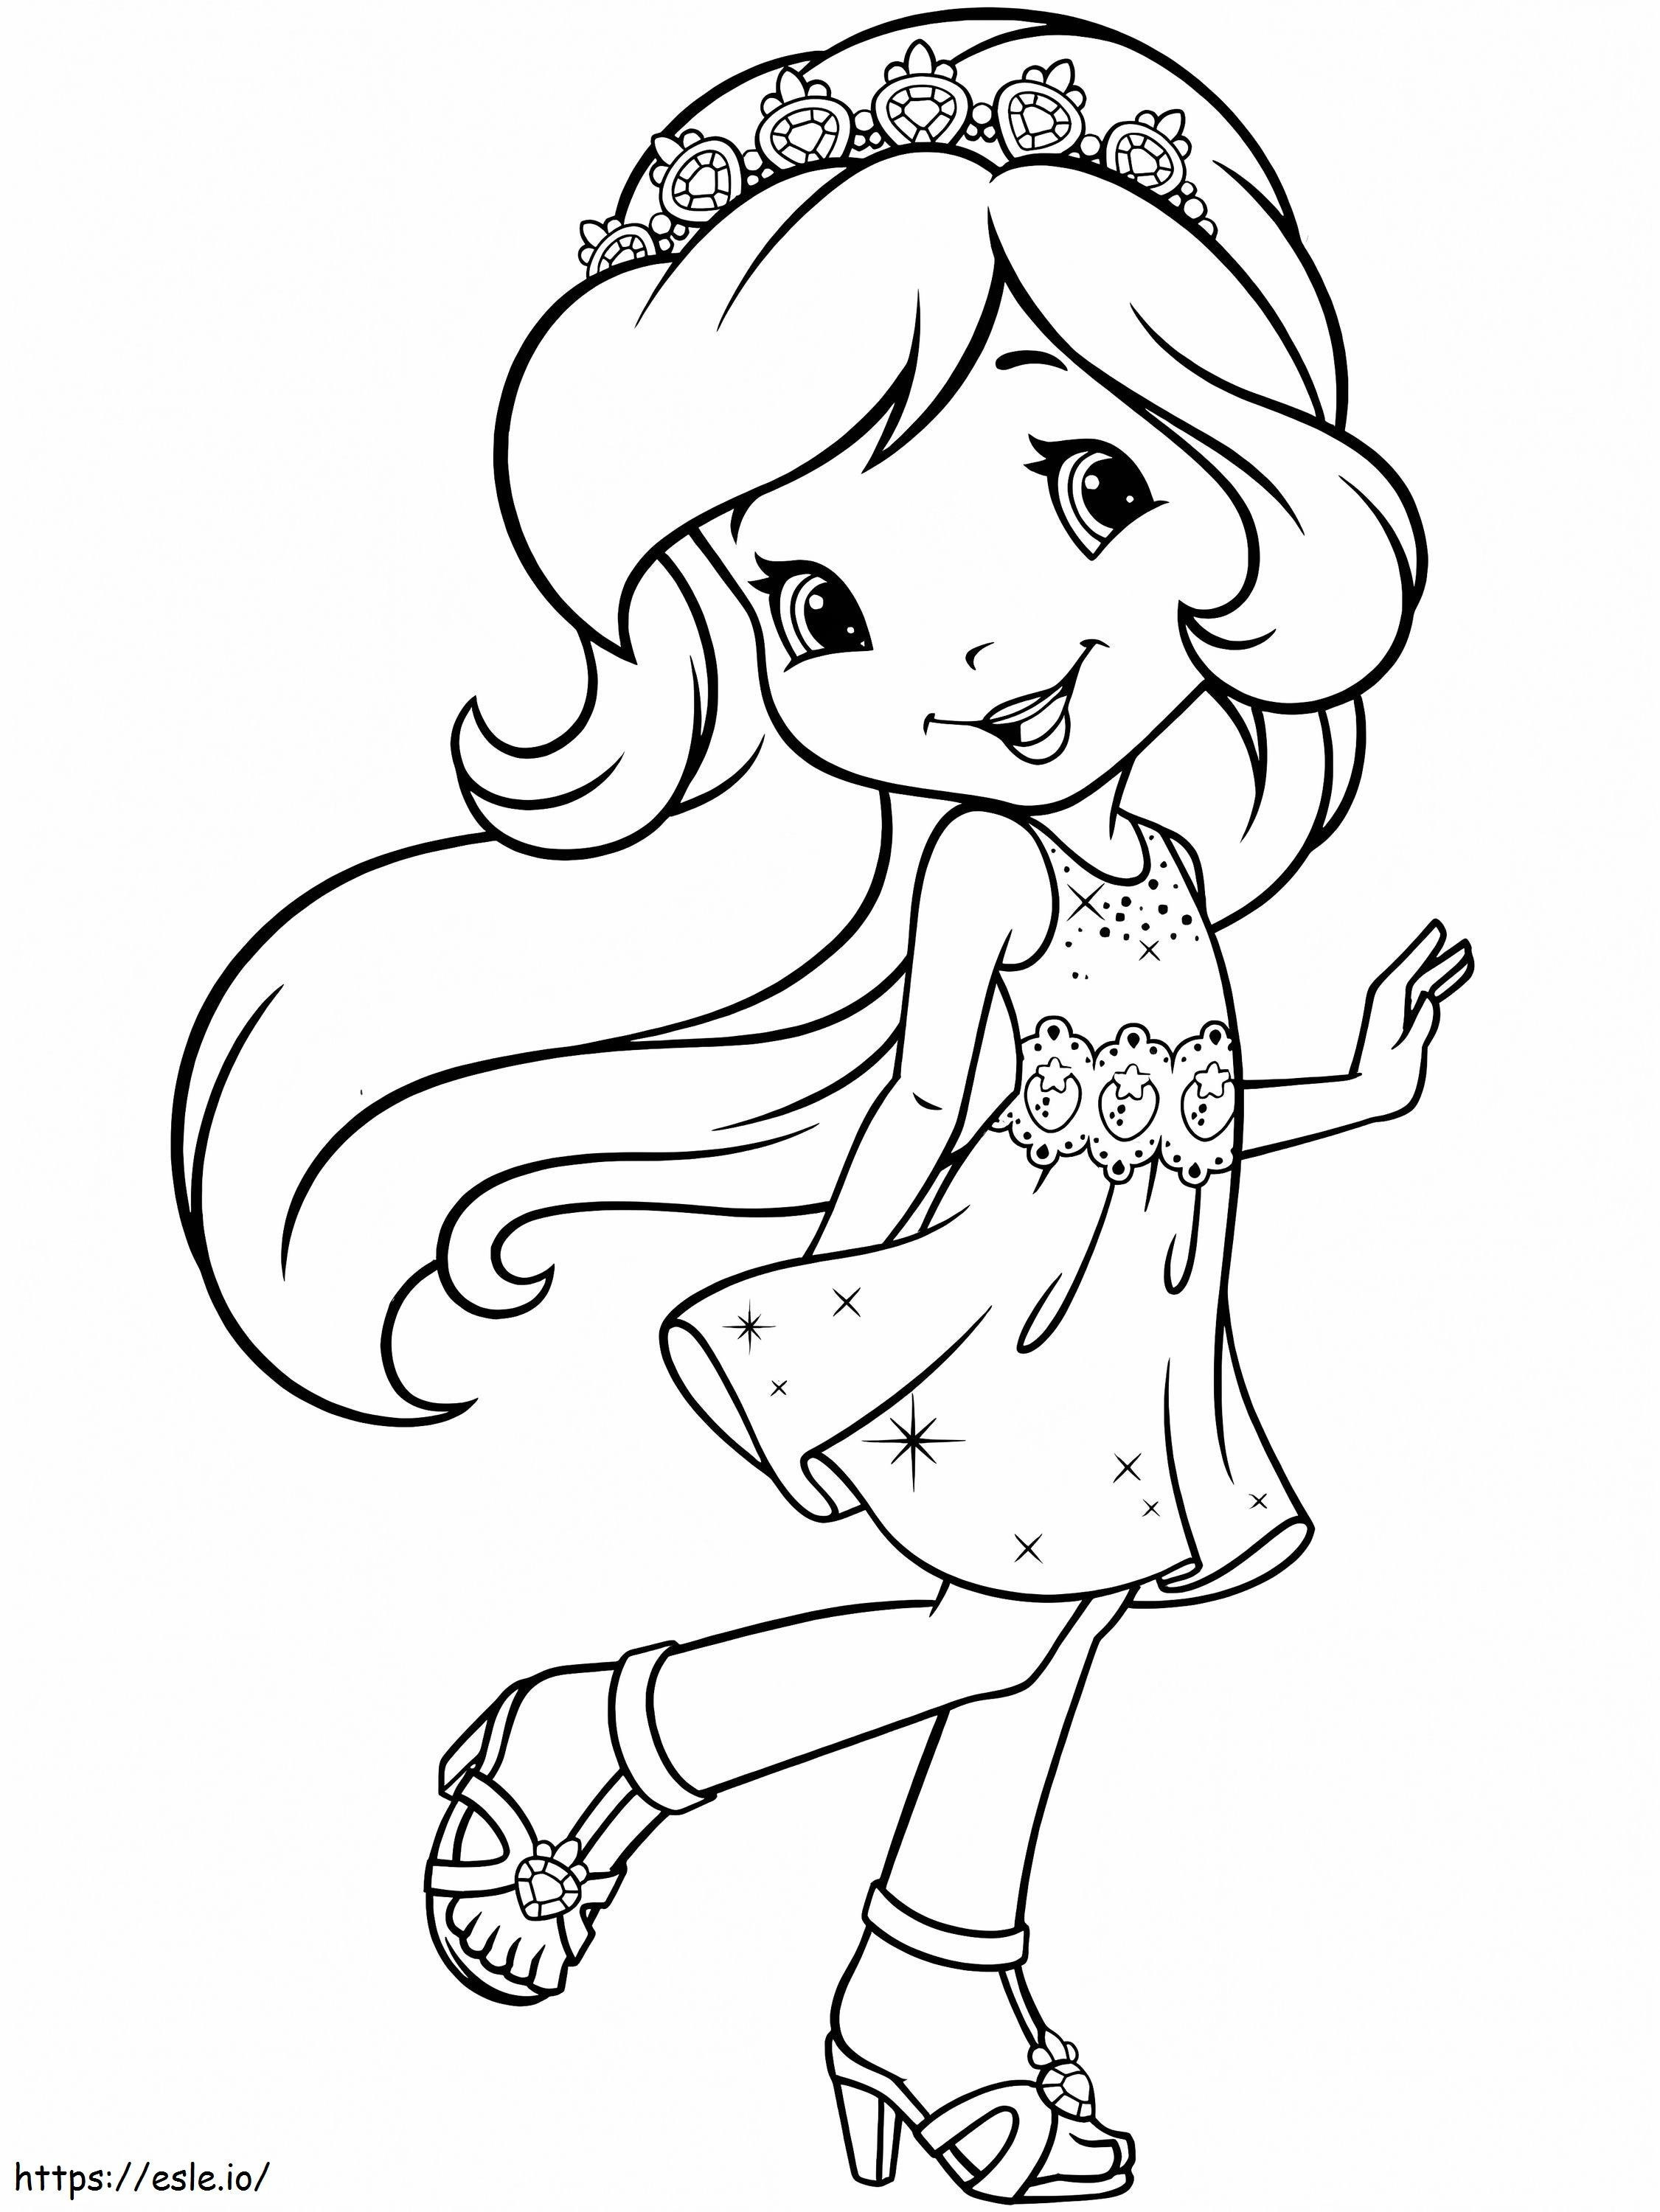 Princess Strawberry Shortcake coloring page